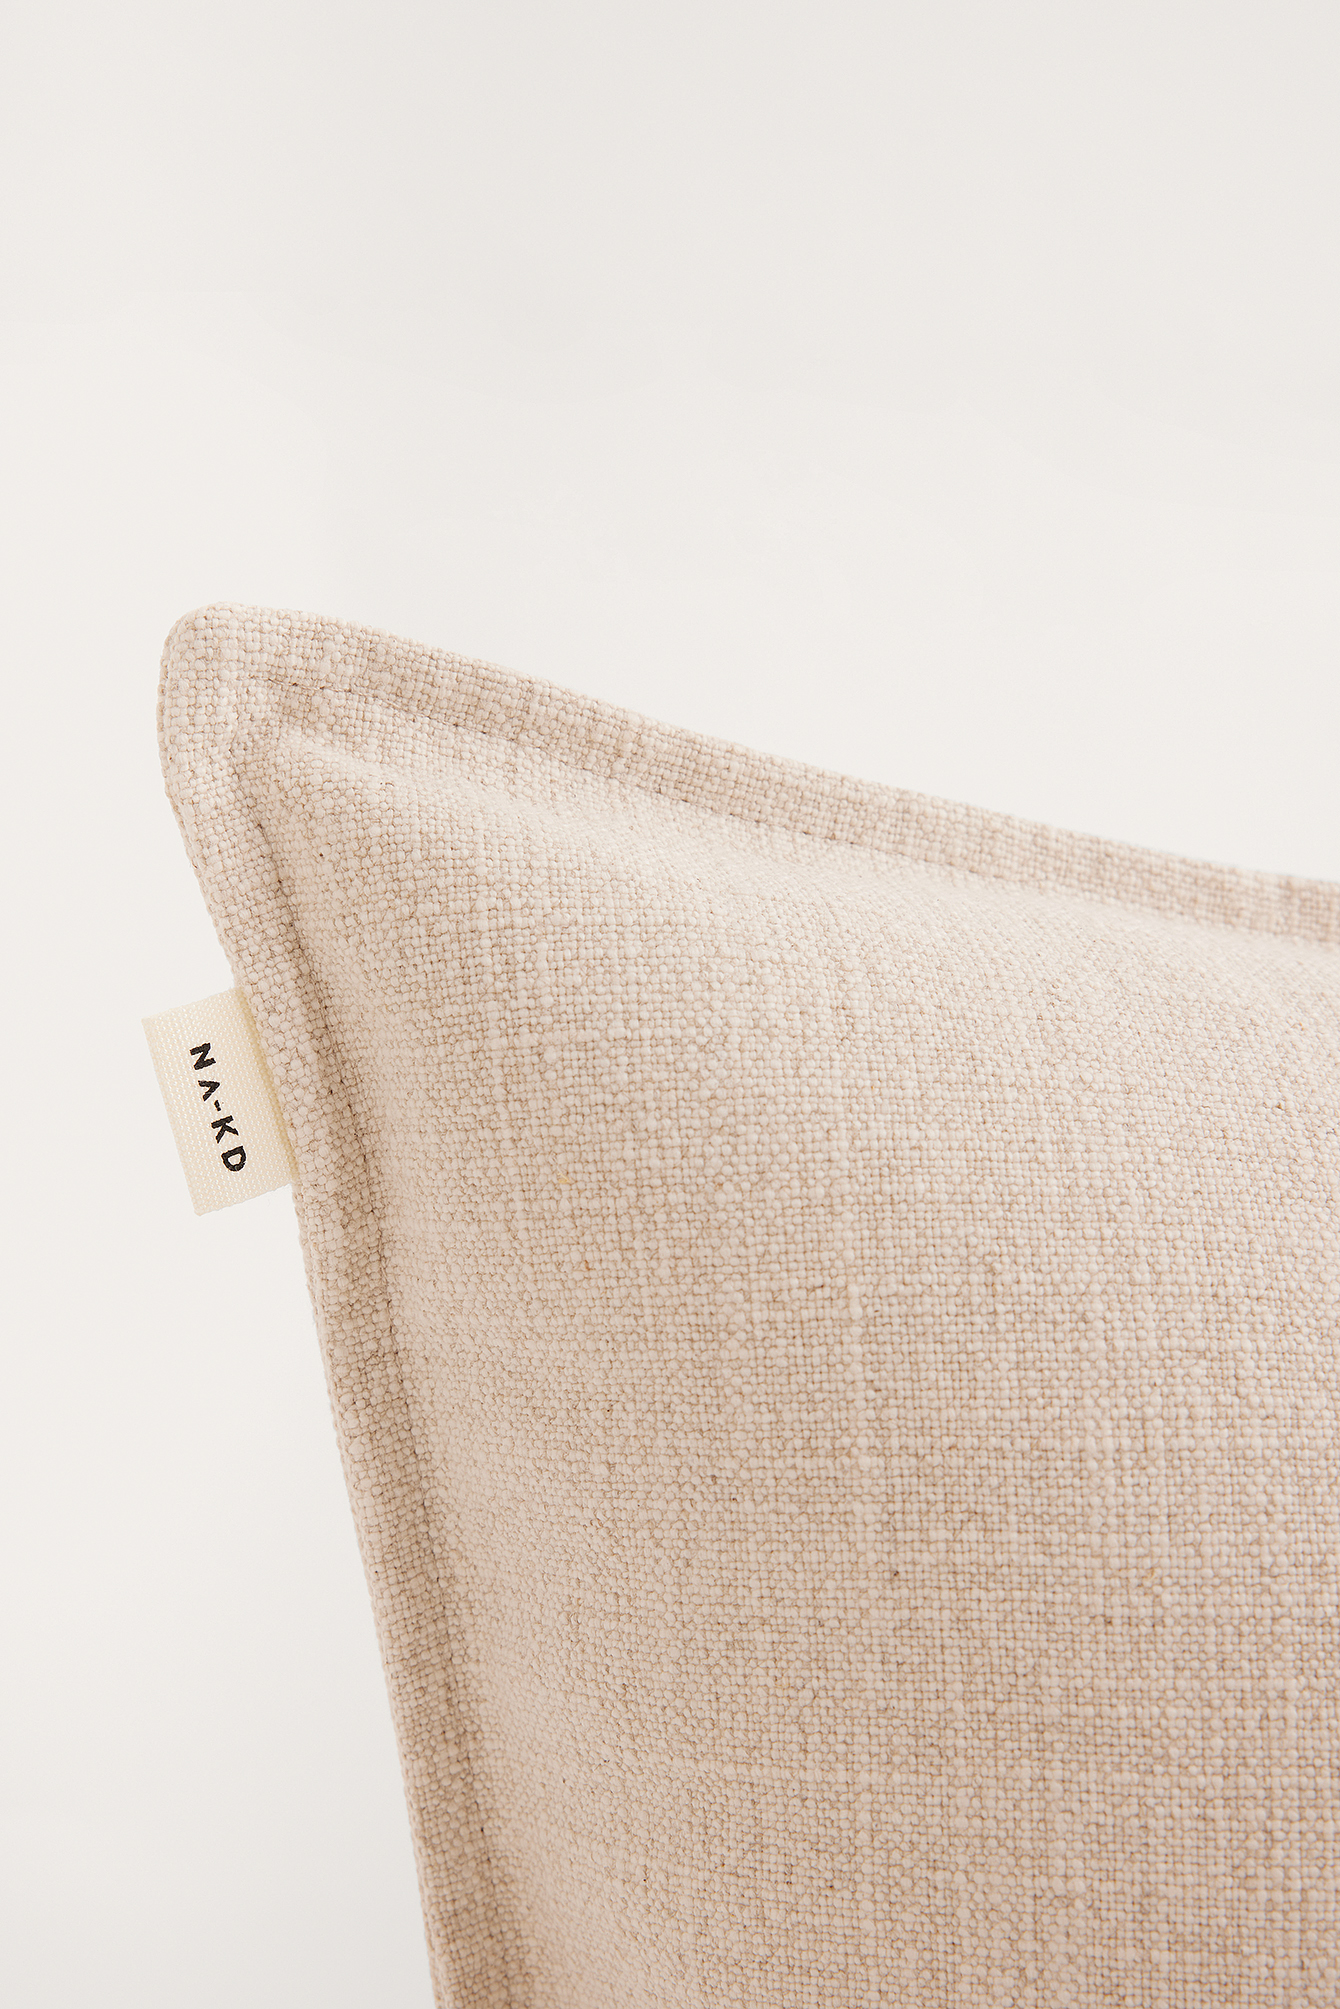 Linen Blend Cushion Cover Beige